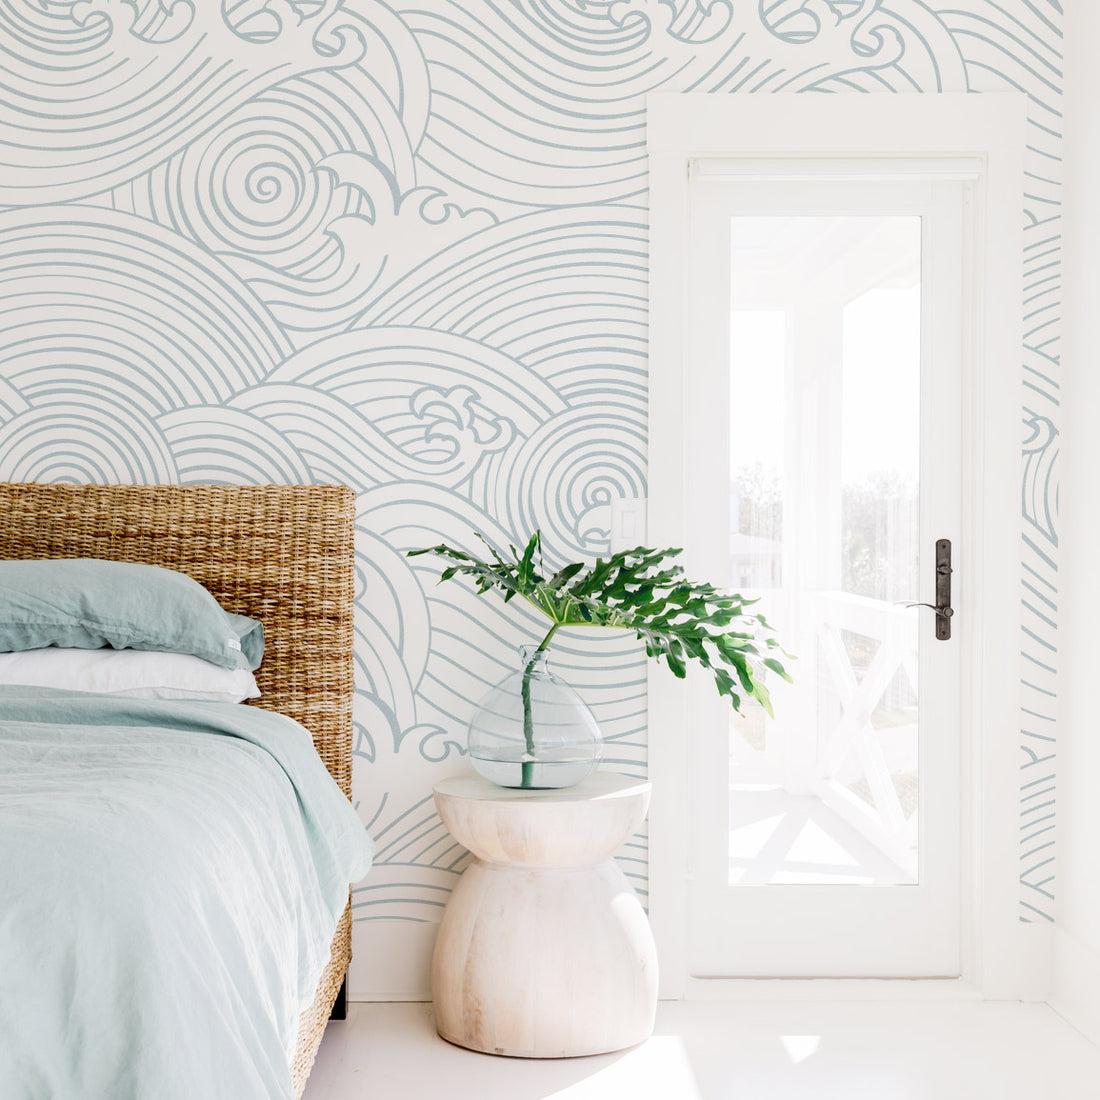 https://cdn.shopify.com/s/files/1/1566/9911/products/Oversized-waves-removable-wallpaper-in-coastal-minimal-bedroom-interior_1100x.jpg?v=1594125314